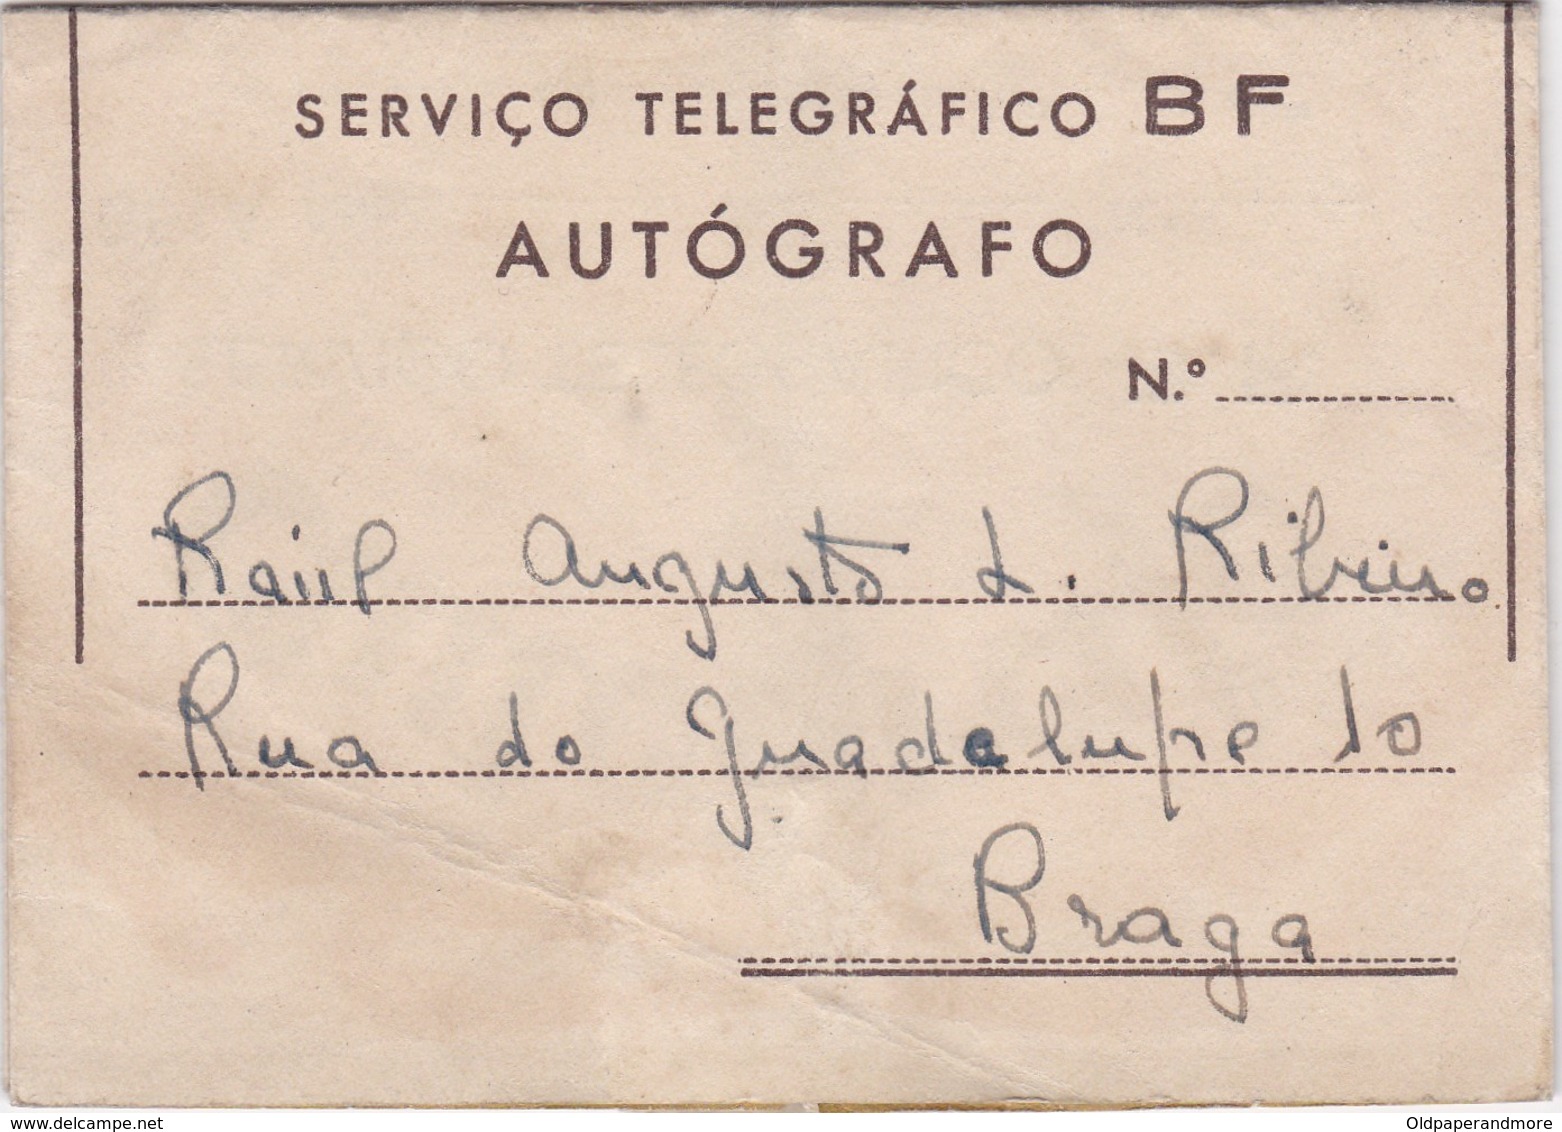 PORTUGAL TELEGRAMA TELEGRAM - TELEGRAPH B.F. - MERRY CHRISTMAS - PORTO  To BRAGA - Storia Postale